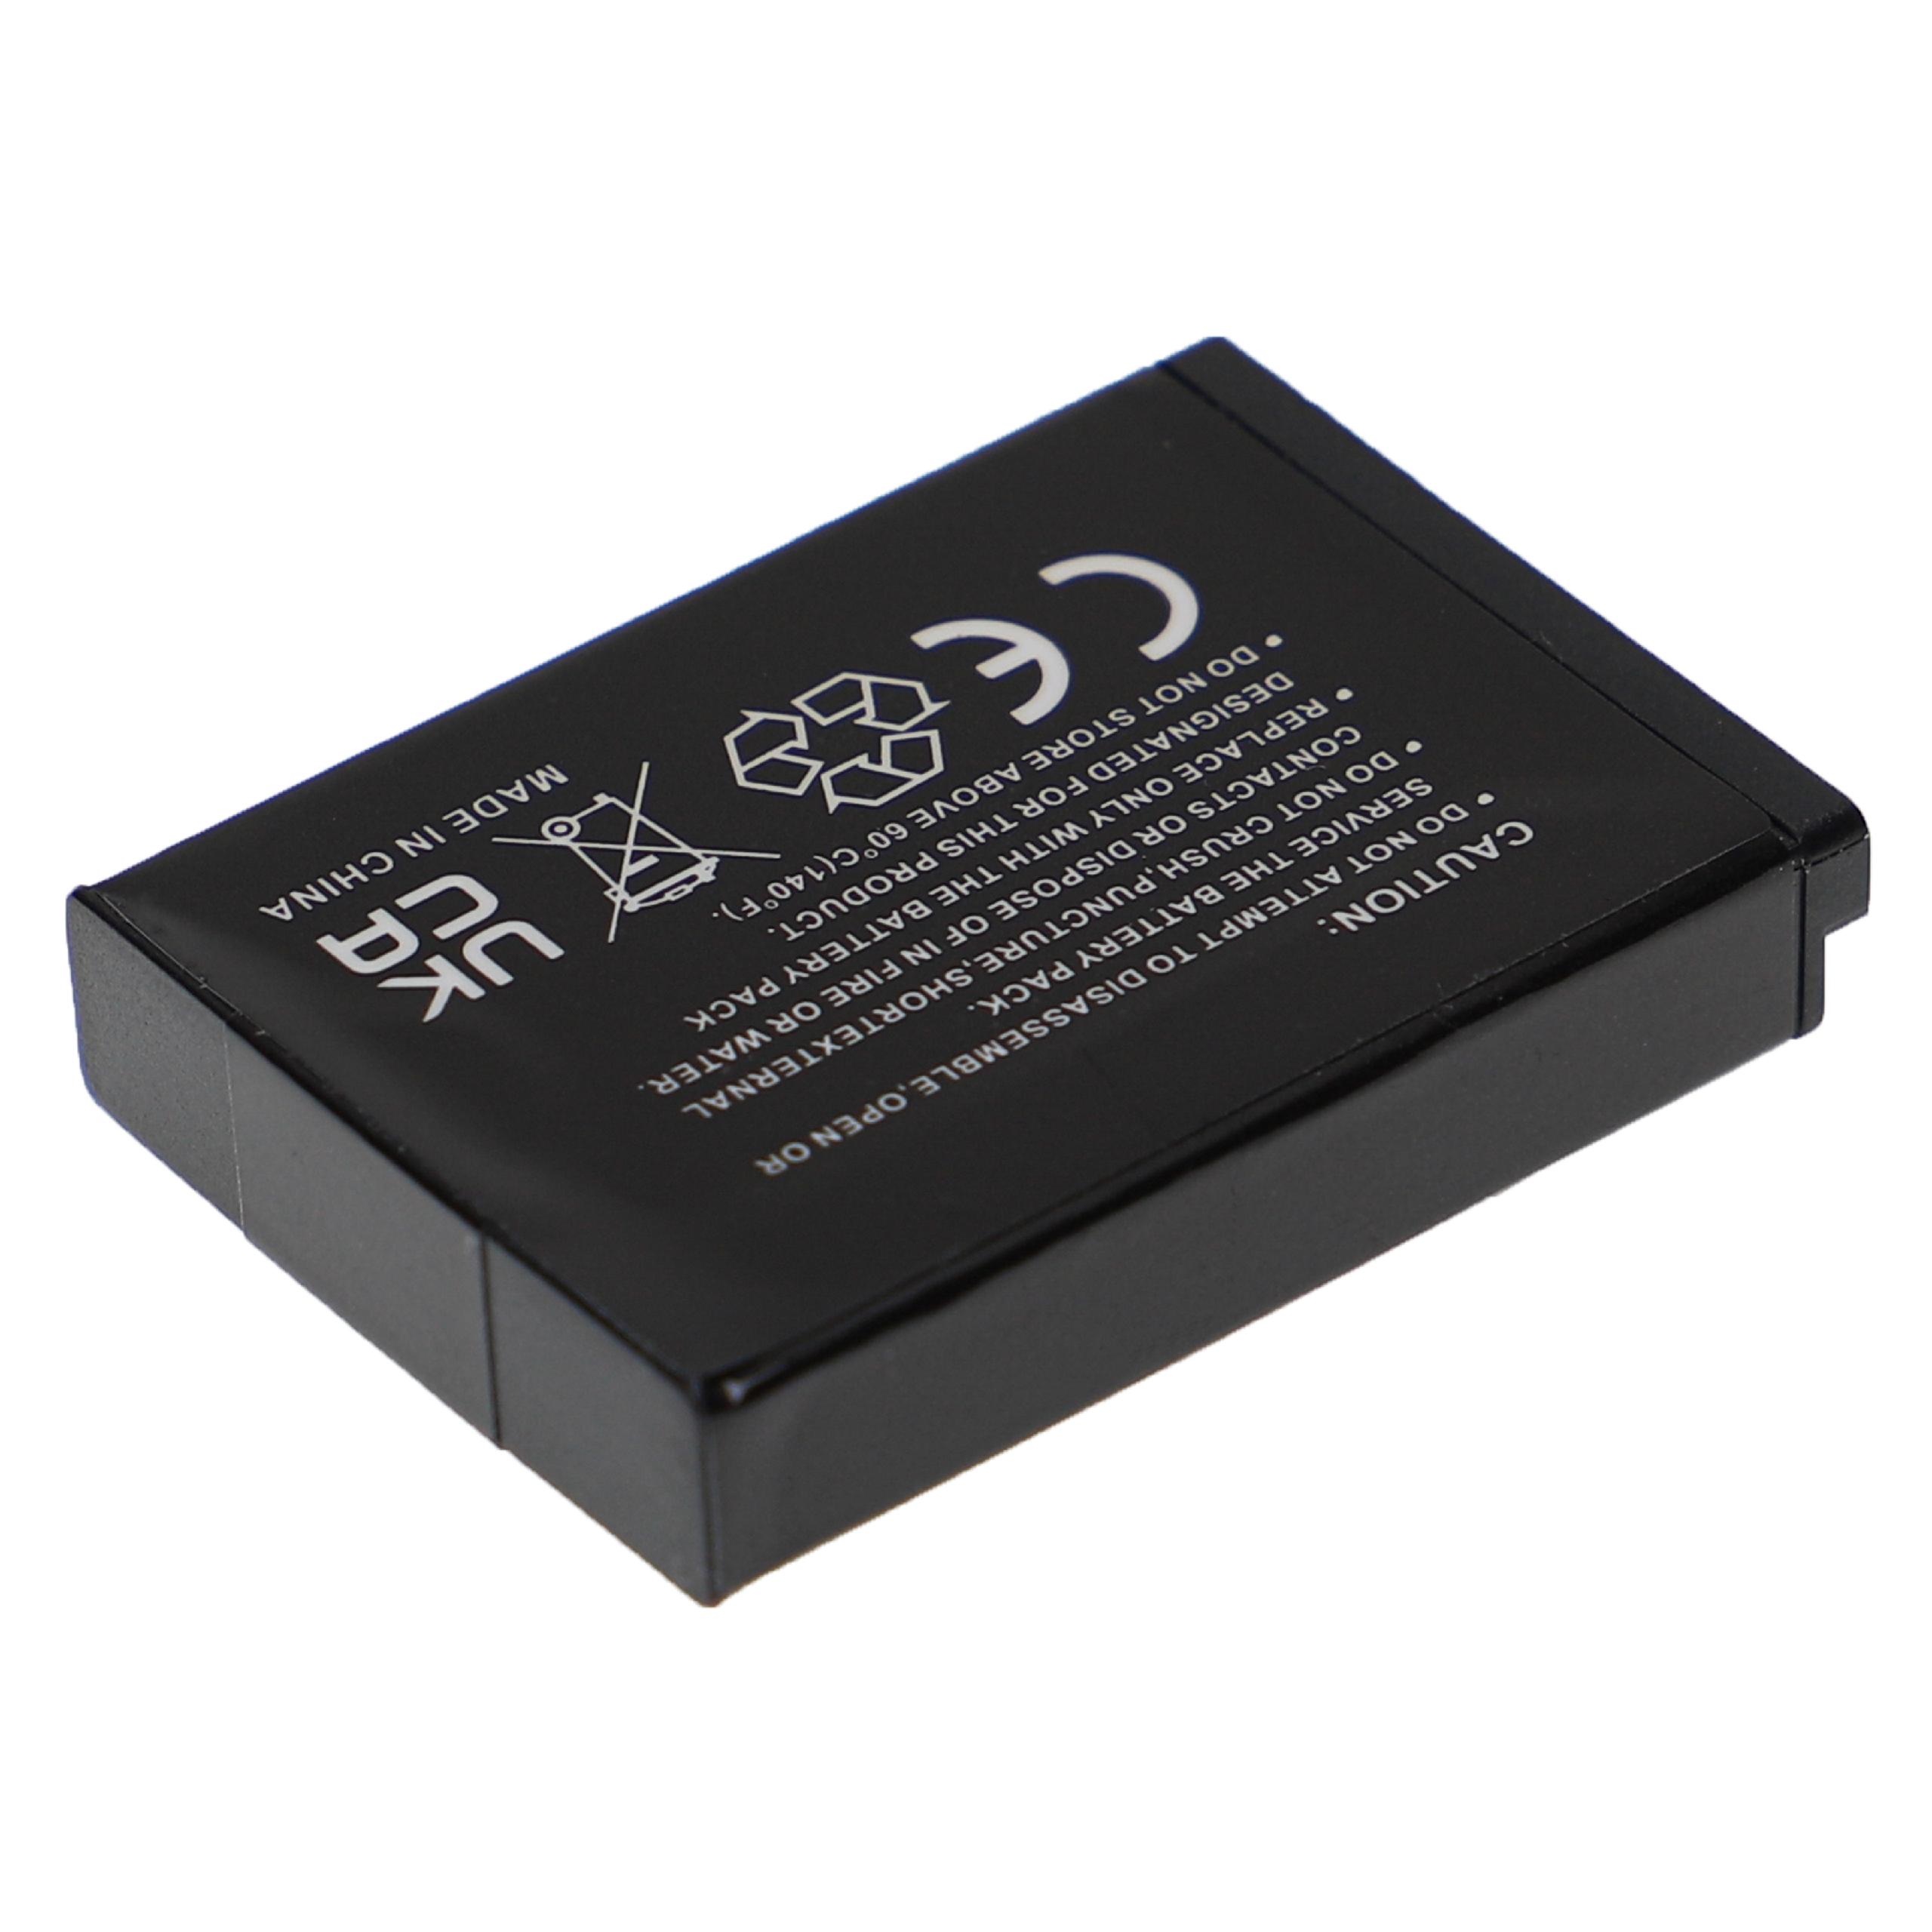 Akumulator do aparatu cyfrowego zamiennik Samsung BP-85a, BP85a, EA-BP85a, IA-BP85a - 750 mAh 3,7 V Li-Ion